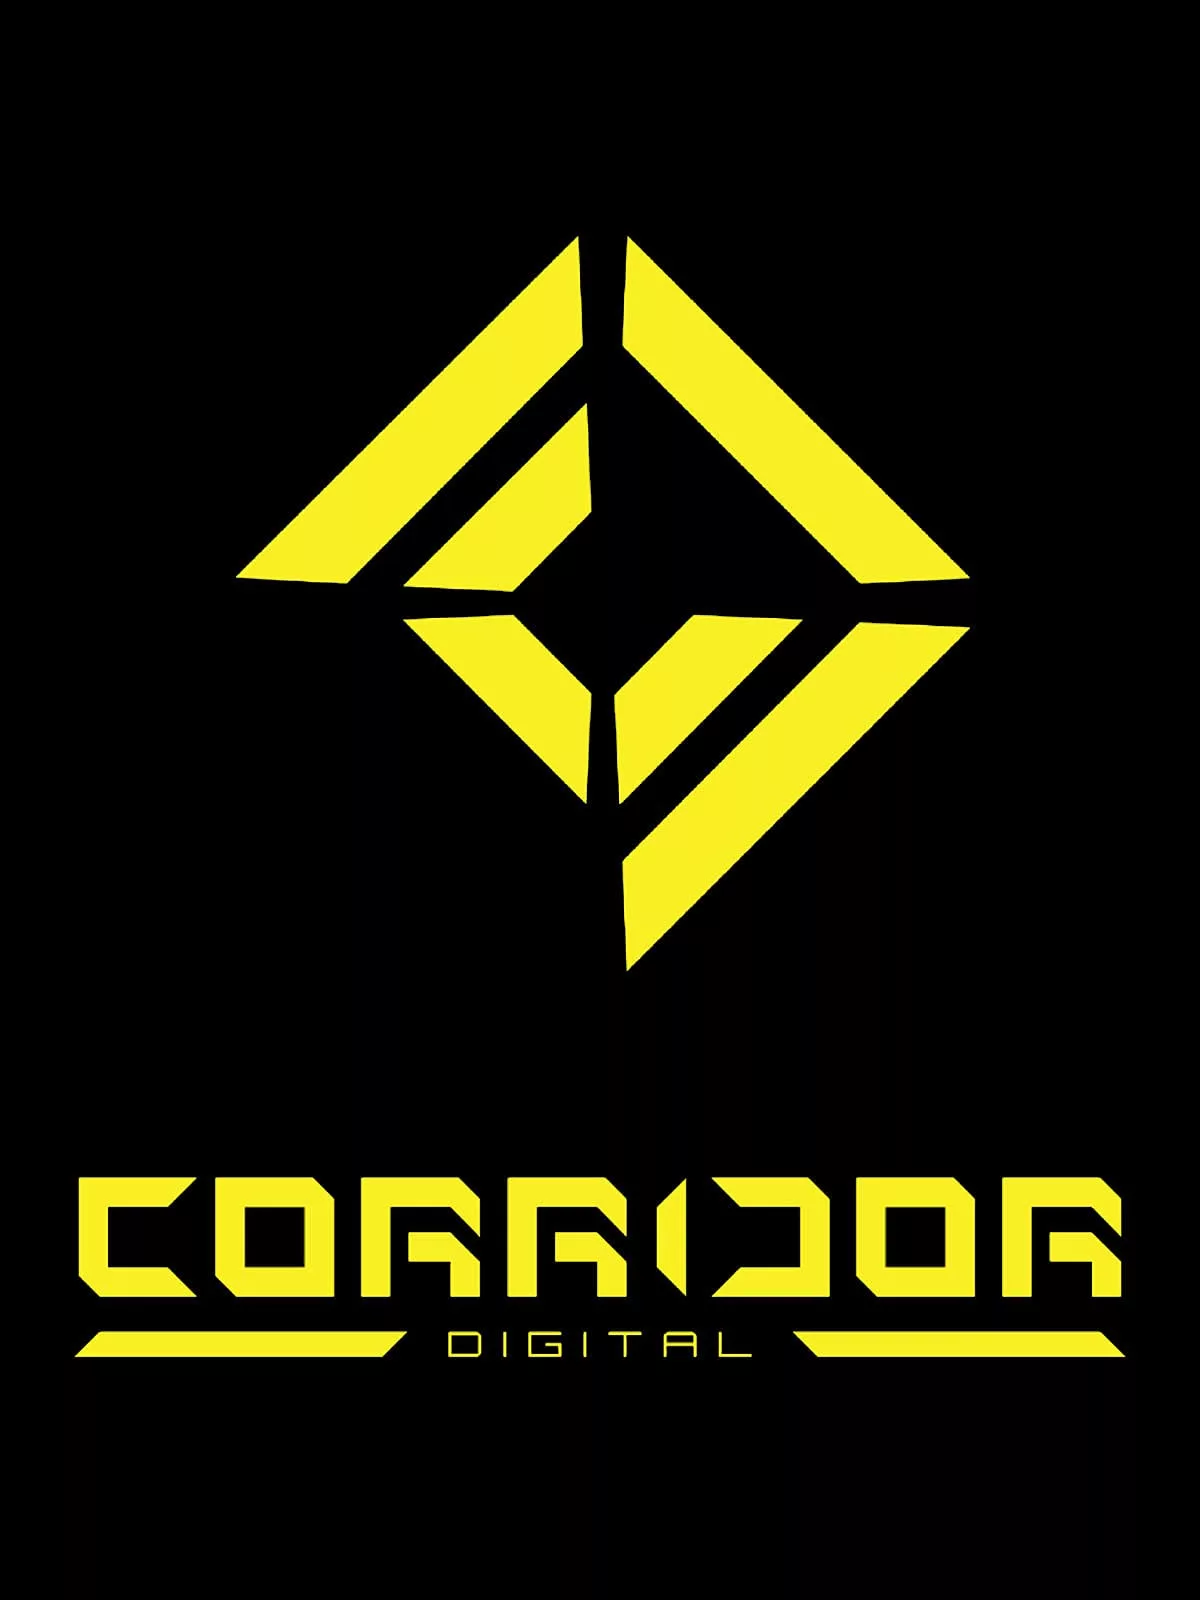 Corridor Digital Yellow On Black Square Logo